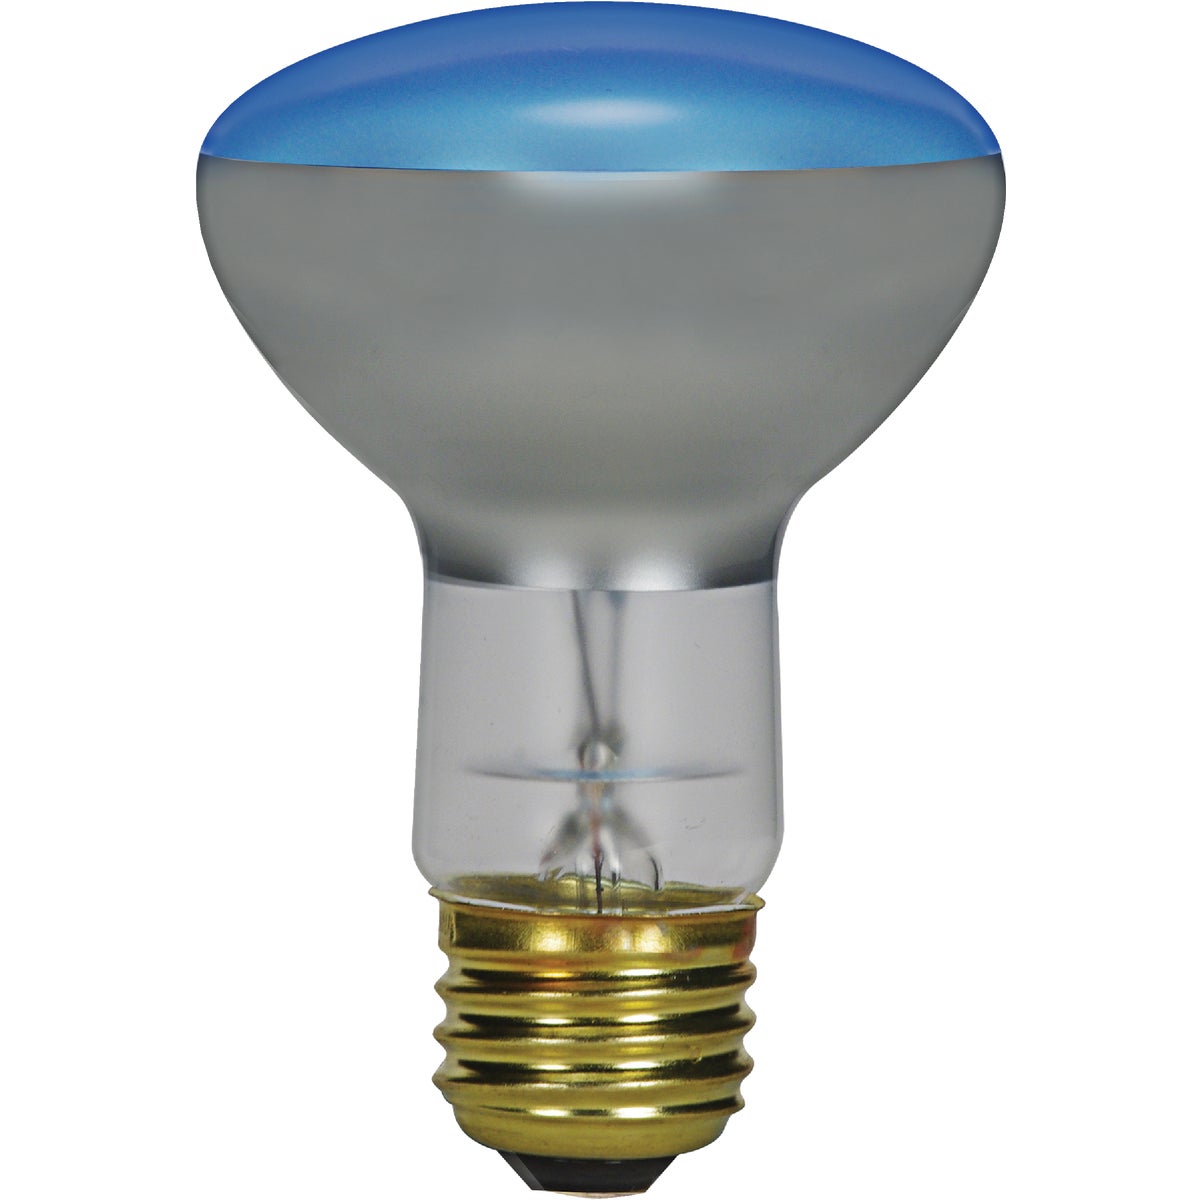 Item 516882, R20 incandescent plant light bulb with medium brass base.